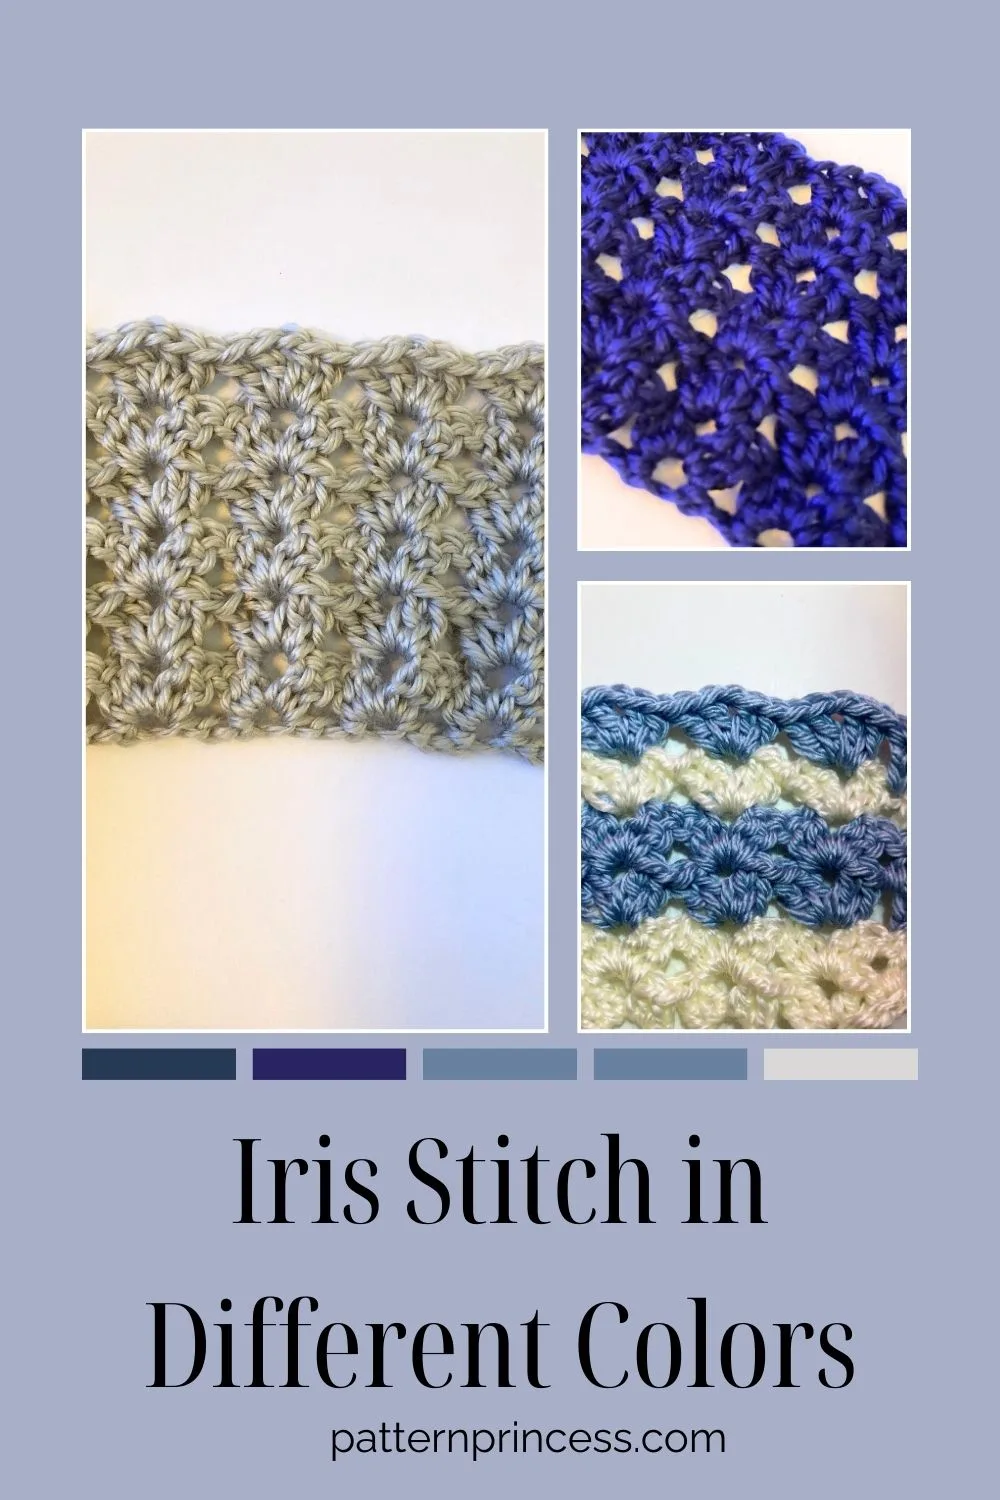 Iris Stitch in Different Colors